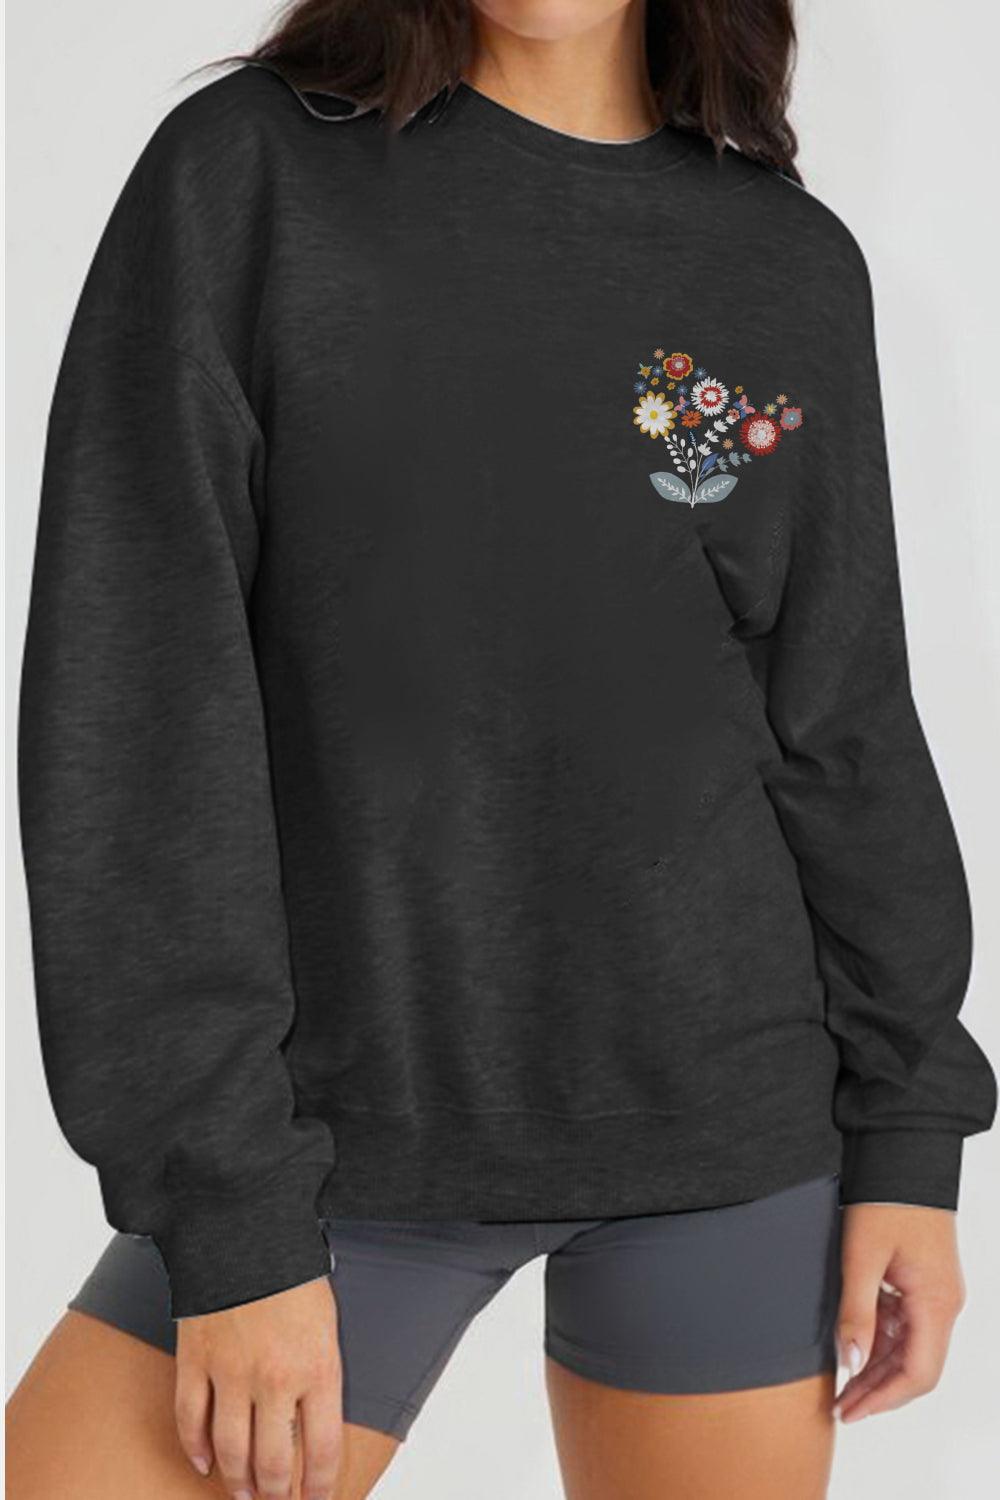 Simply Love Full Size Flower Graphic Sweatshirt - Vesteeto